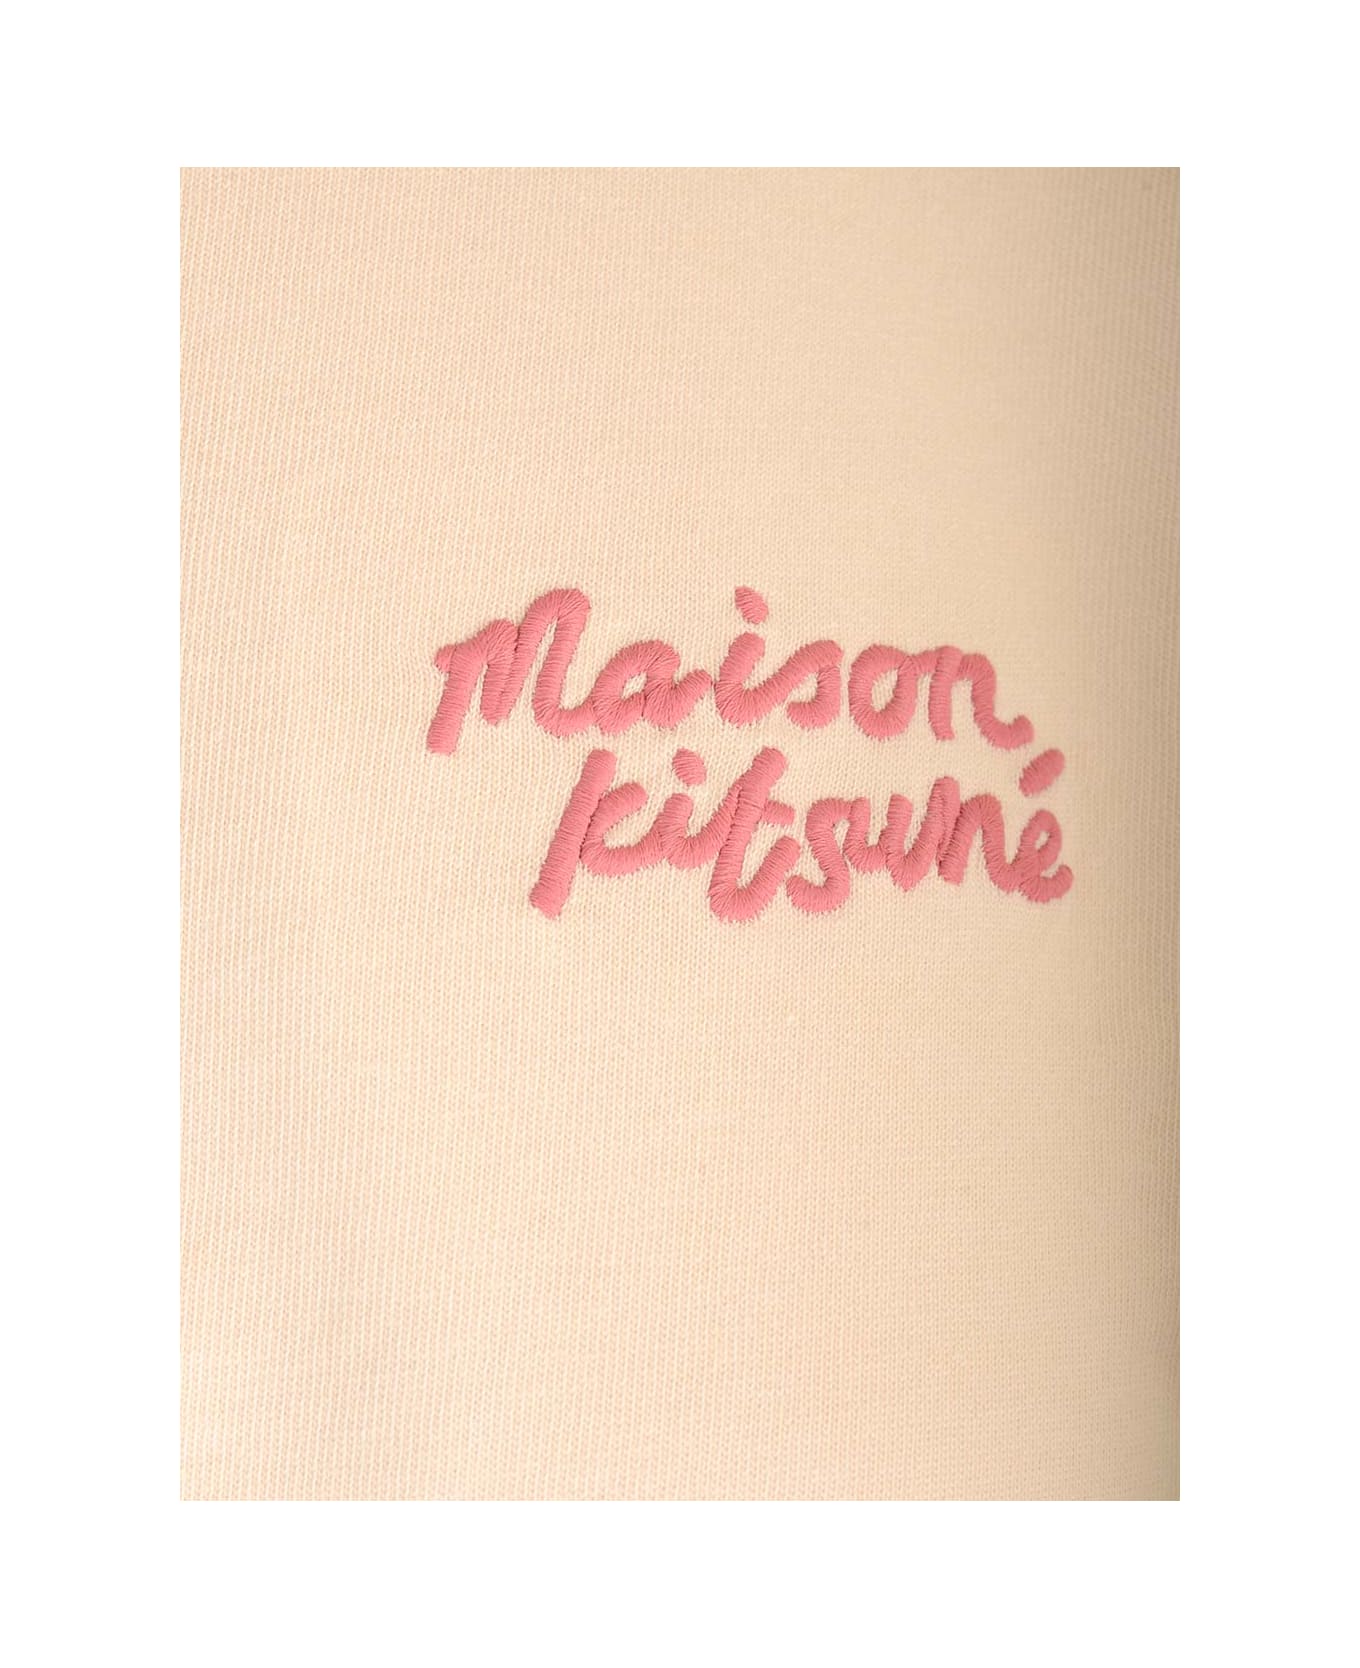 Maison Kitsuné Beige T-shirt With Fuchsia Logo - Fresh Cotton